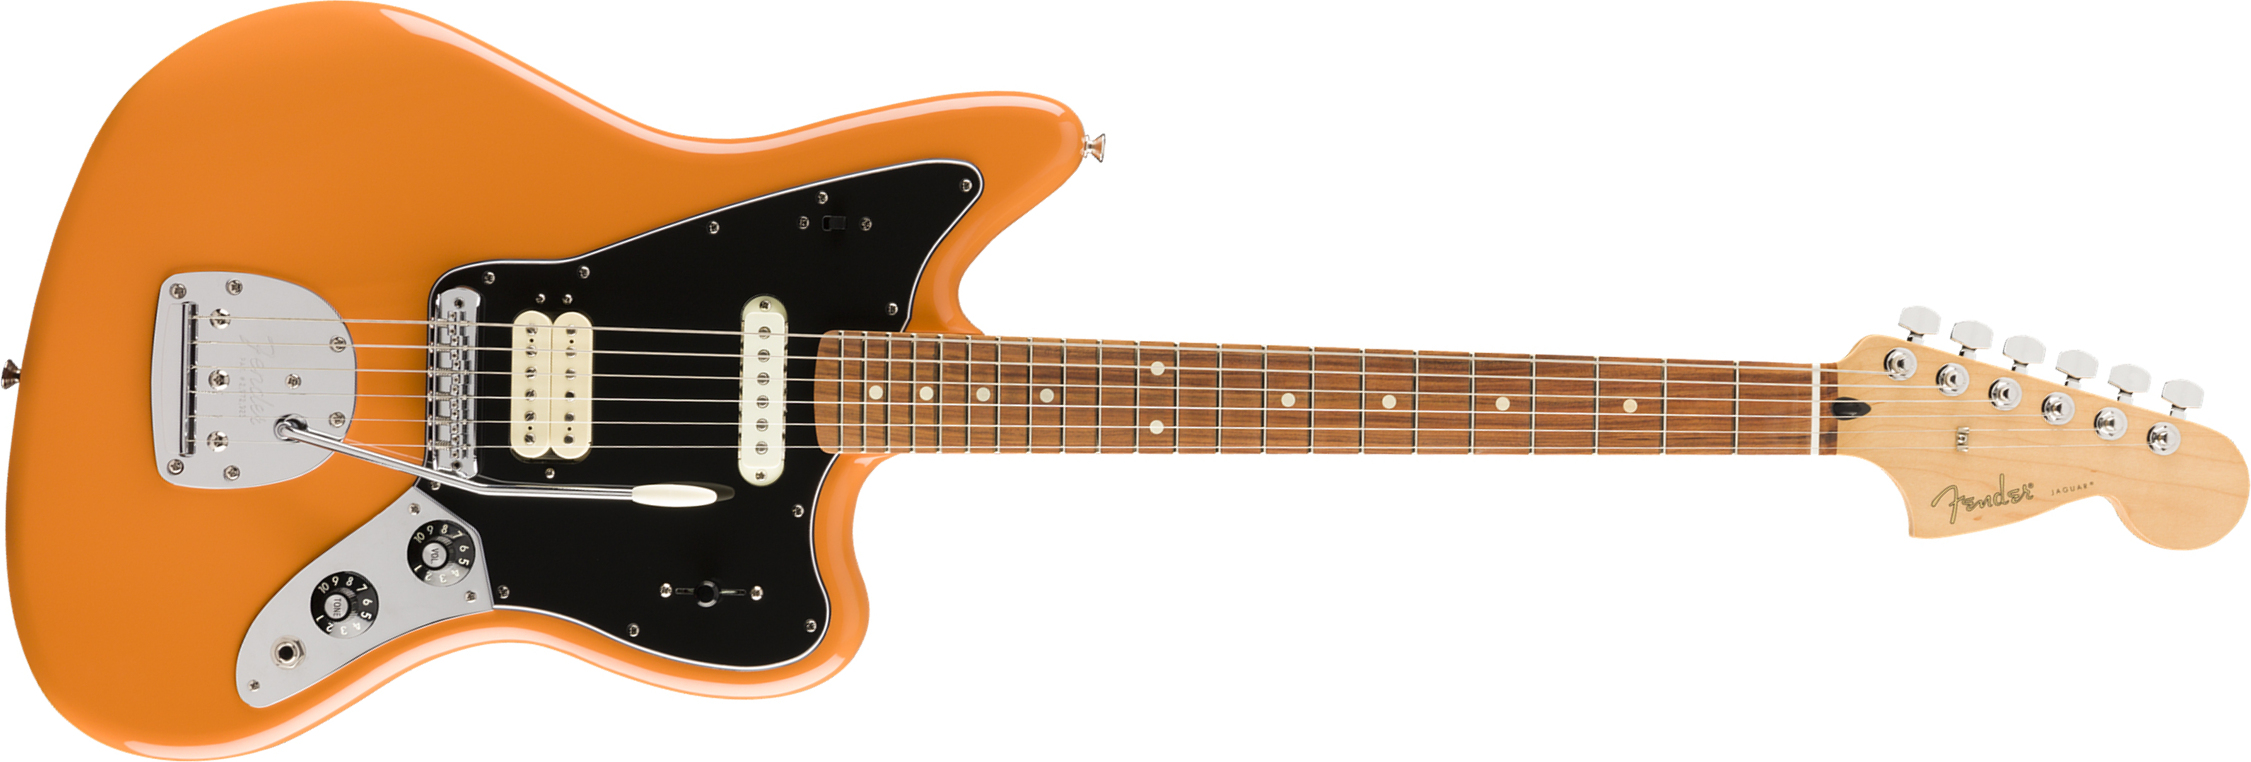 Fender Jaguar Player Mex Hs Pf - Capri Orange - Retro-rock elektrische gitaar - Main picture